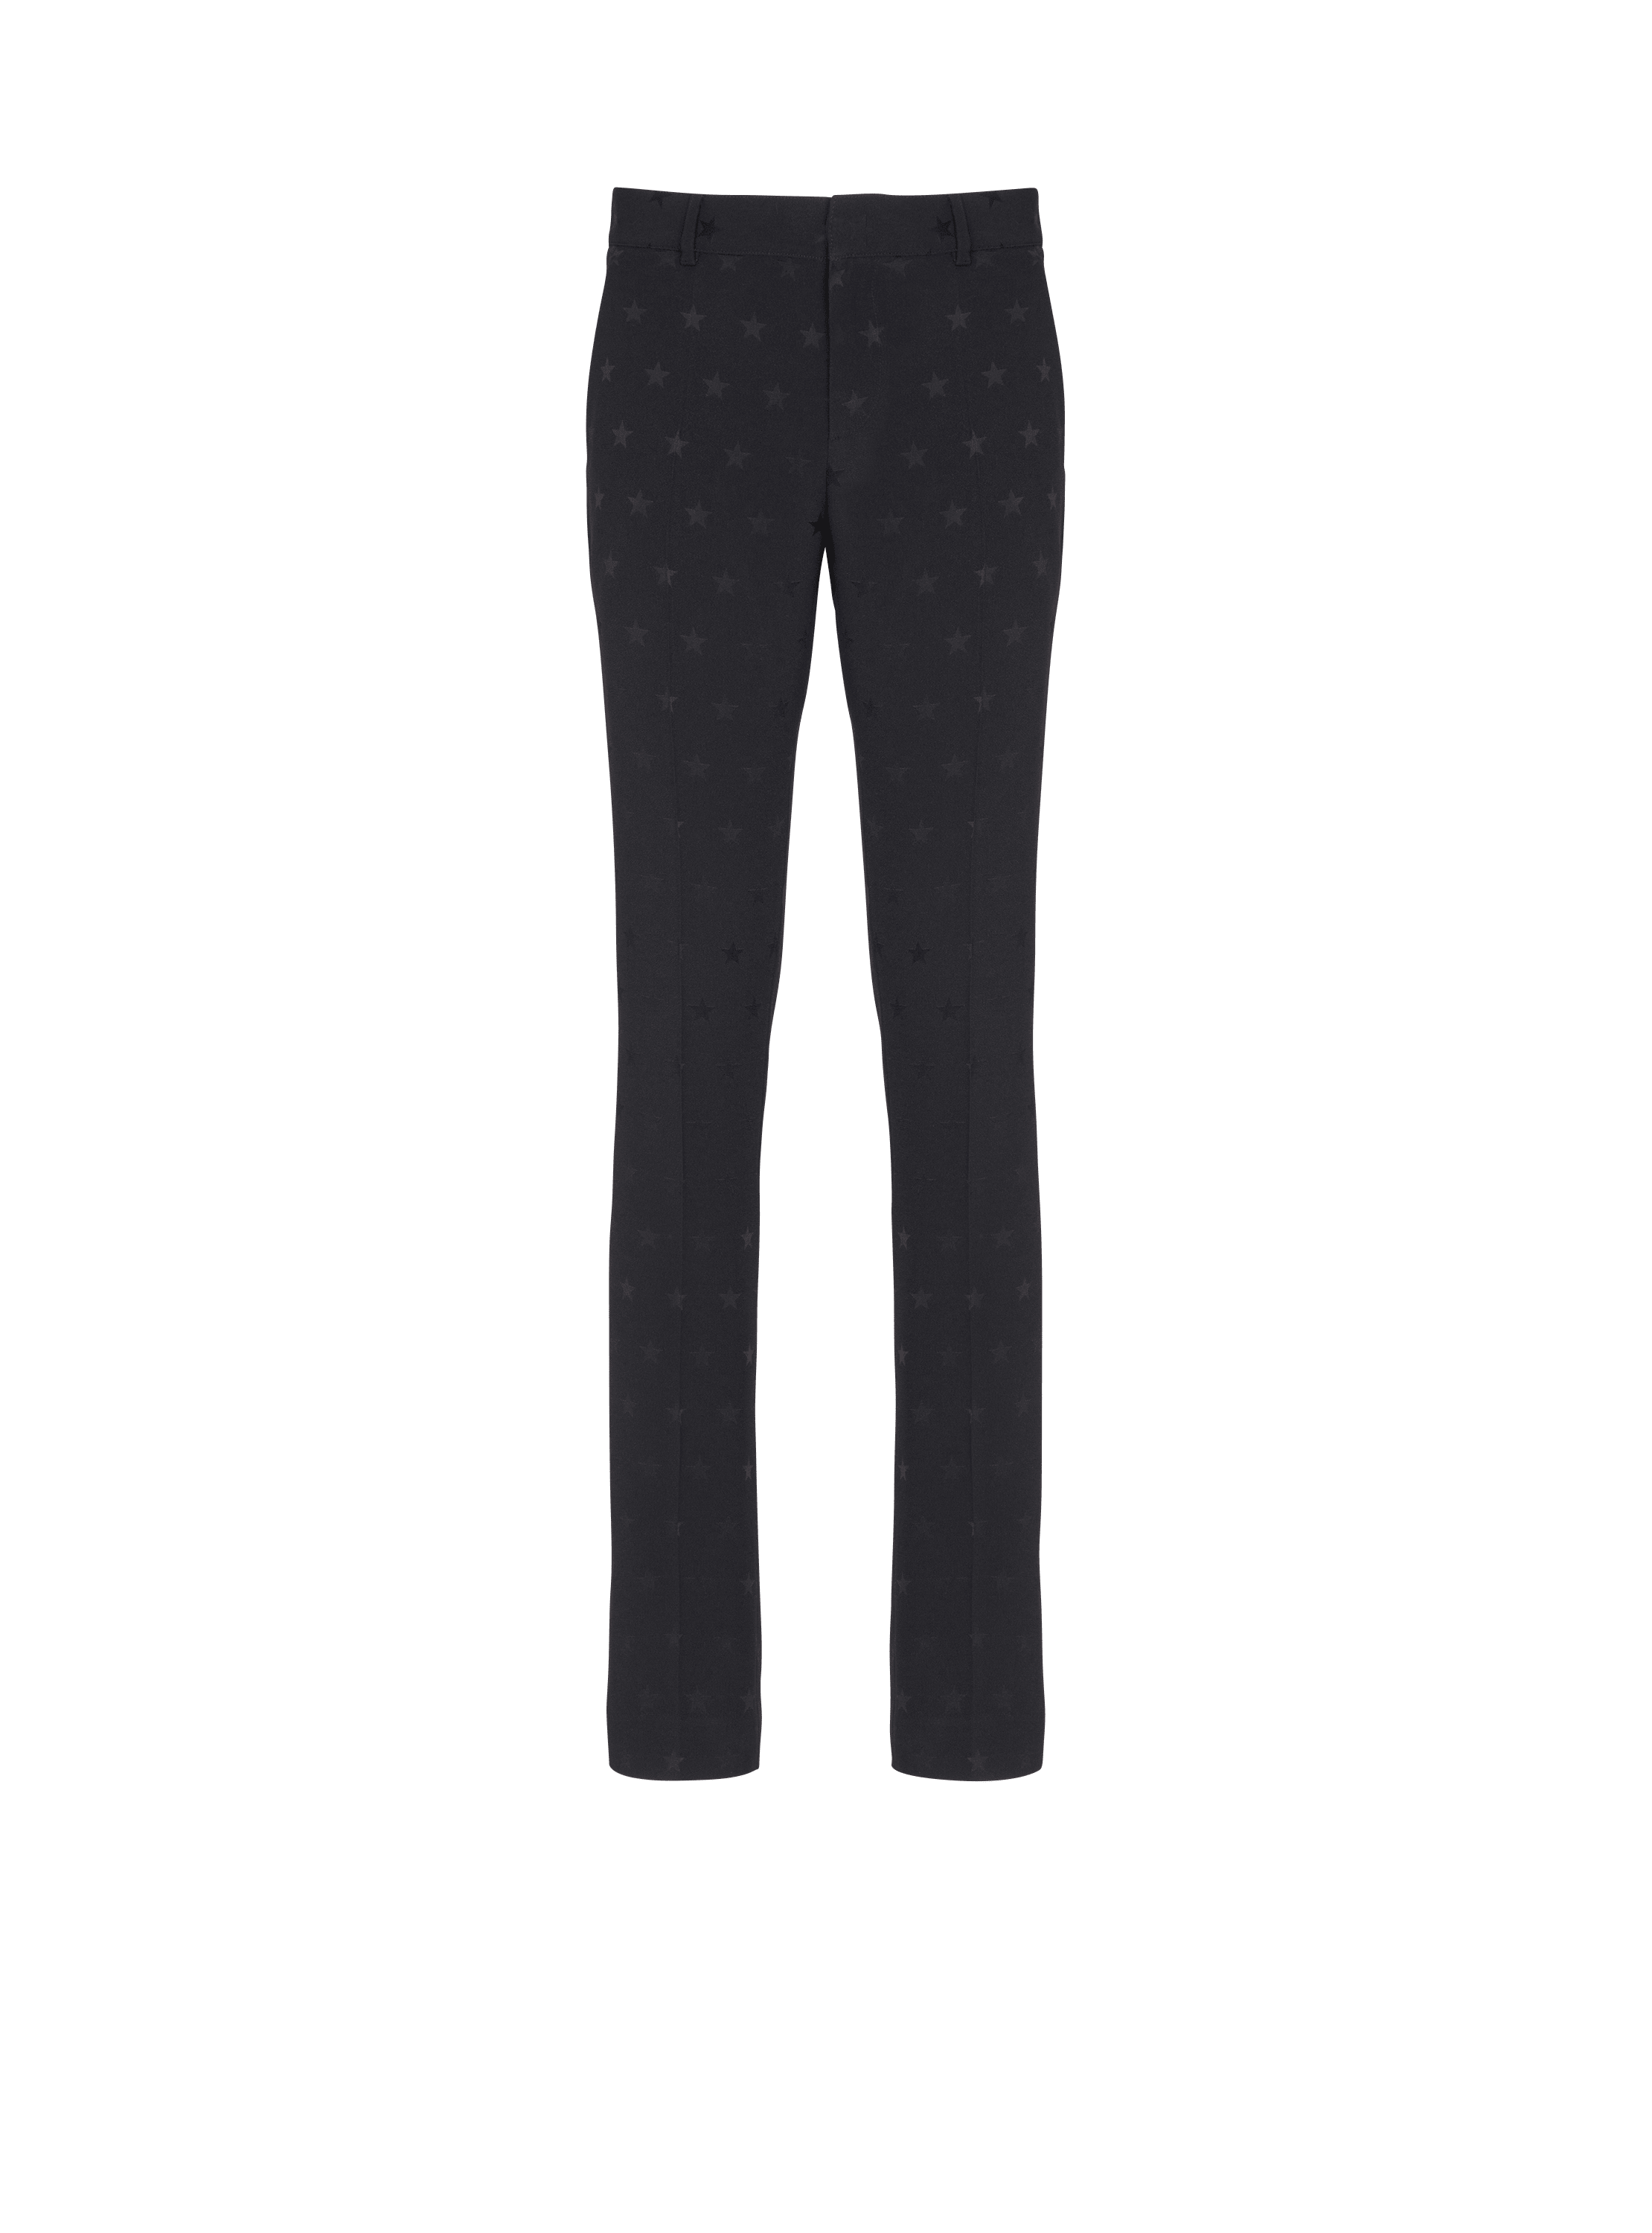 Jacquard crepe trousers with stars, black, hi-res